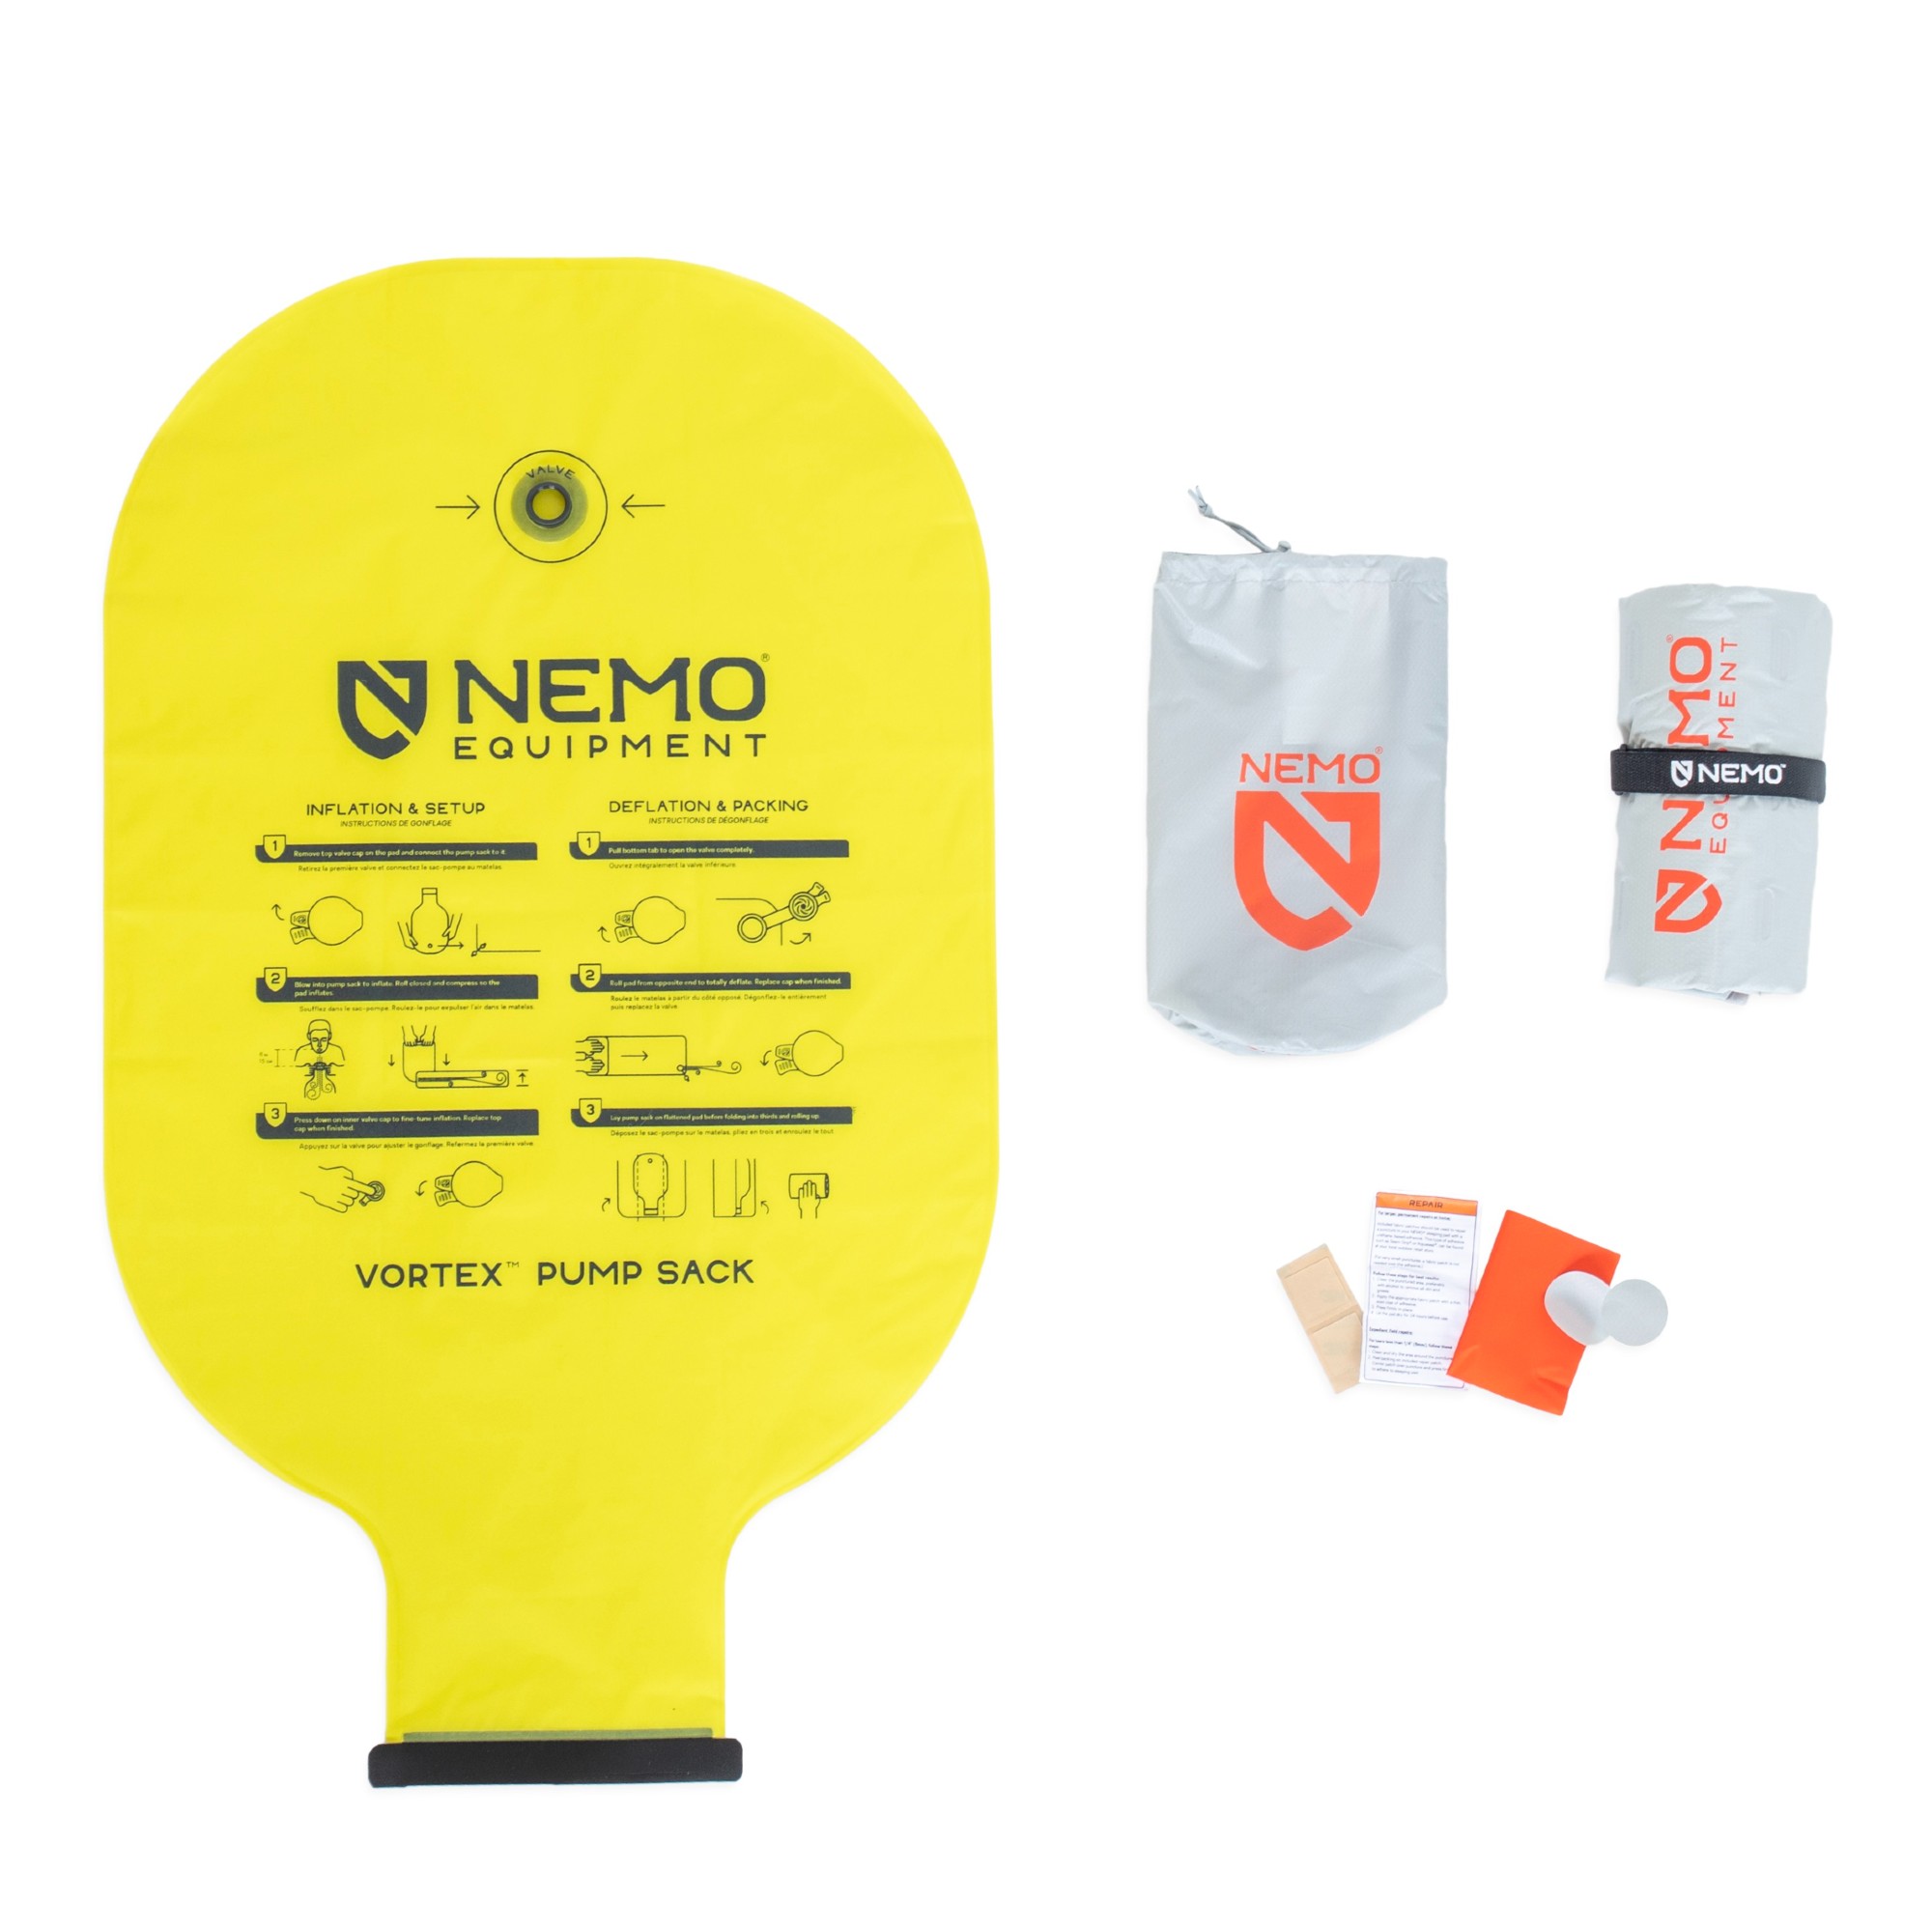 Nemo Tensor All-Season Ultralight Sleeping Mat